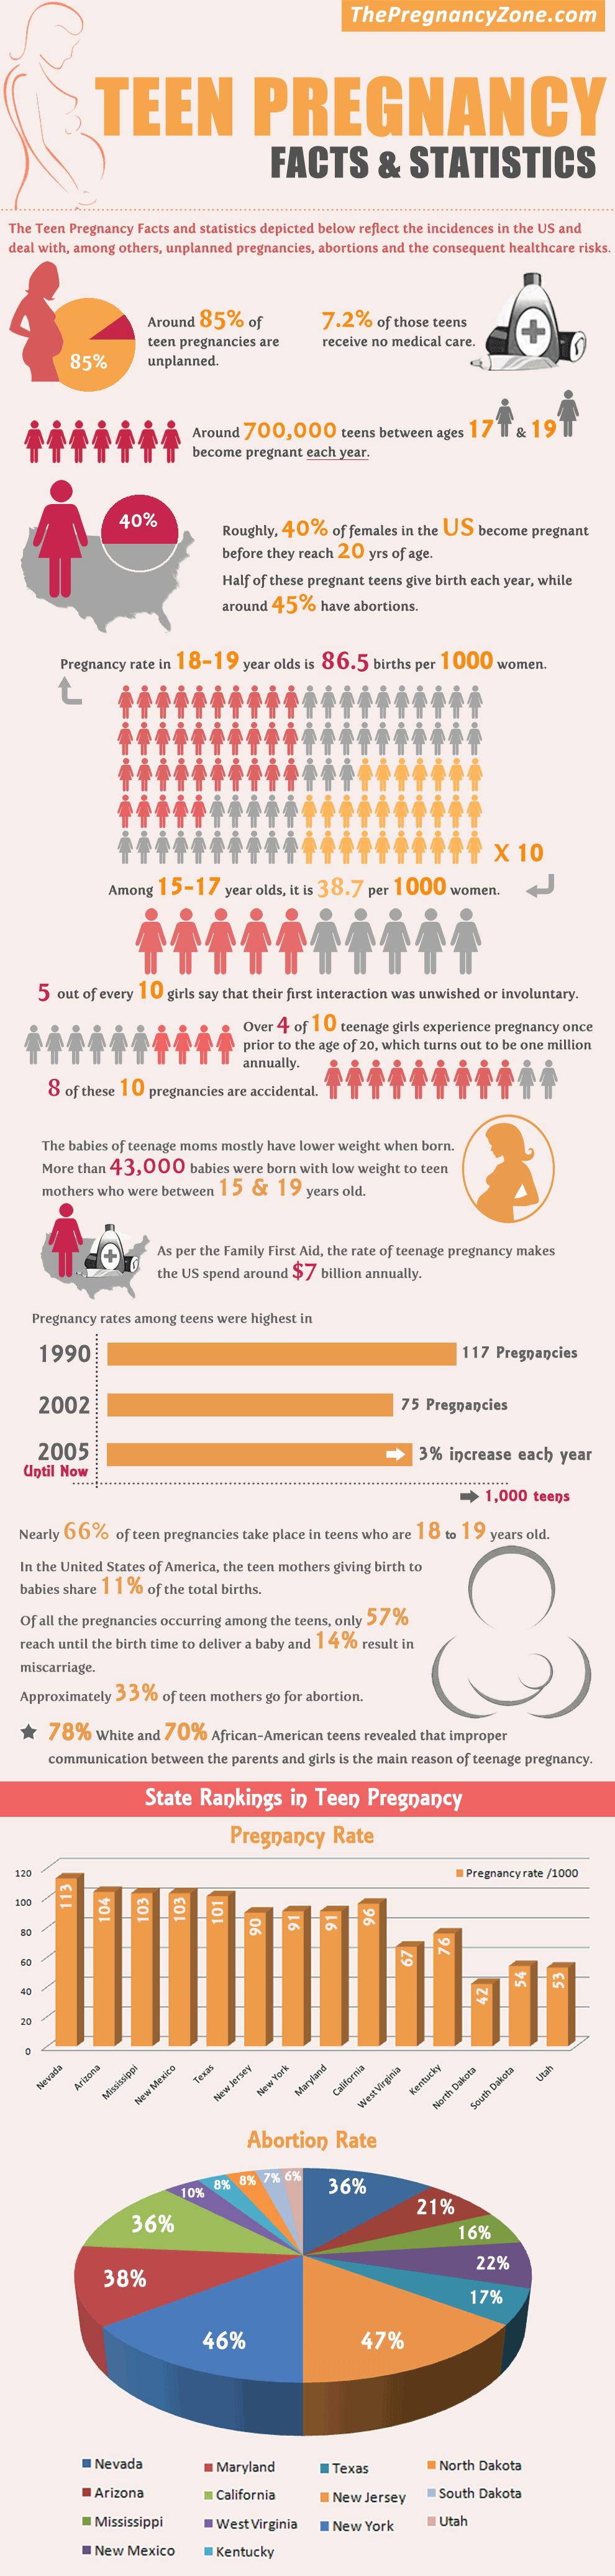 Teen Pregnancy Facts & Statistics